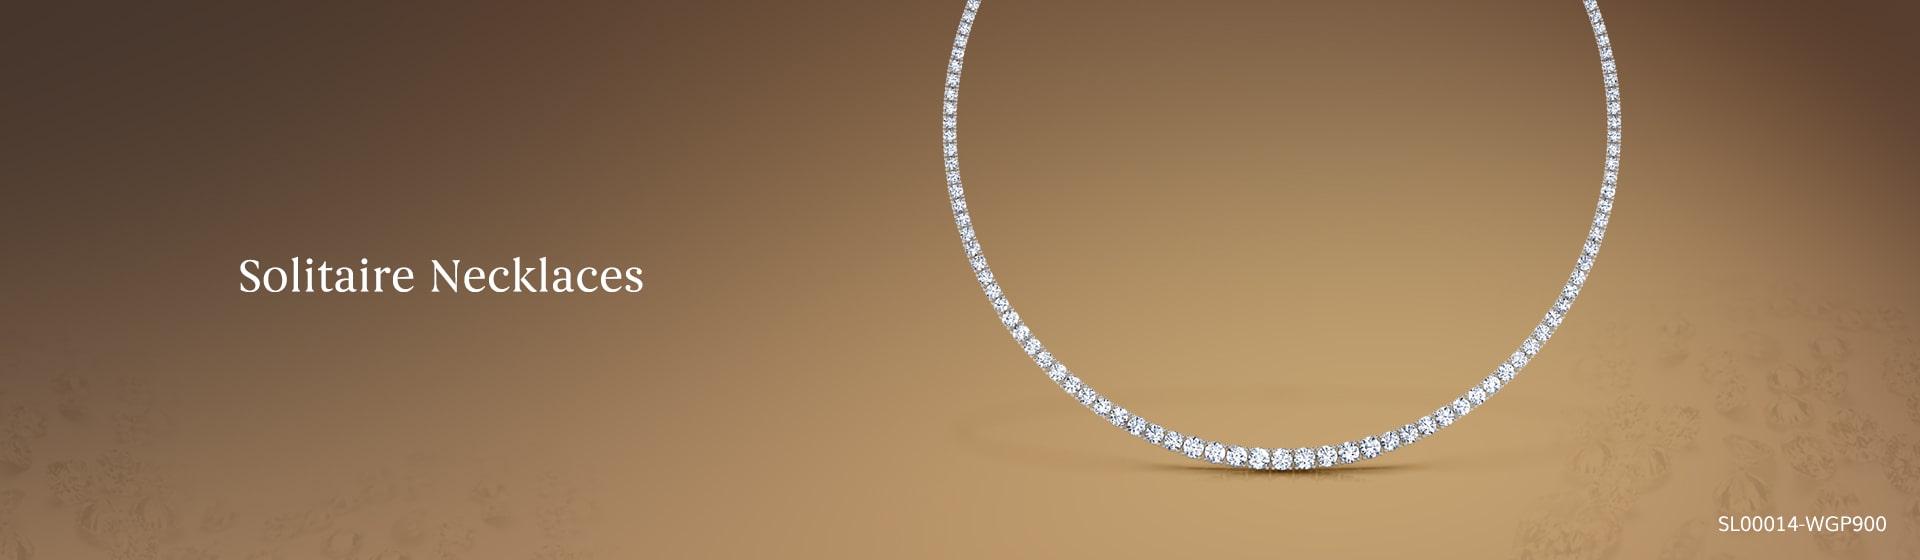 Shop Latest Design Of Solitaire Necklaces For Women Online